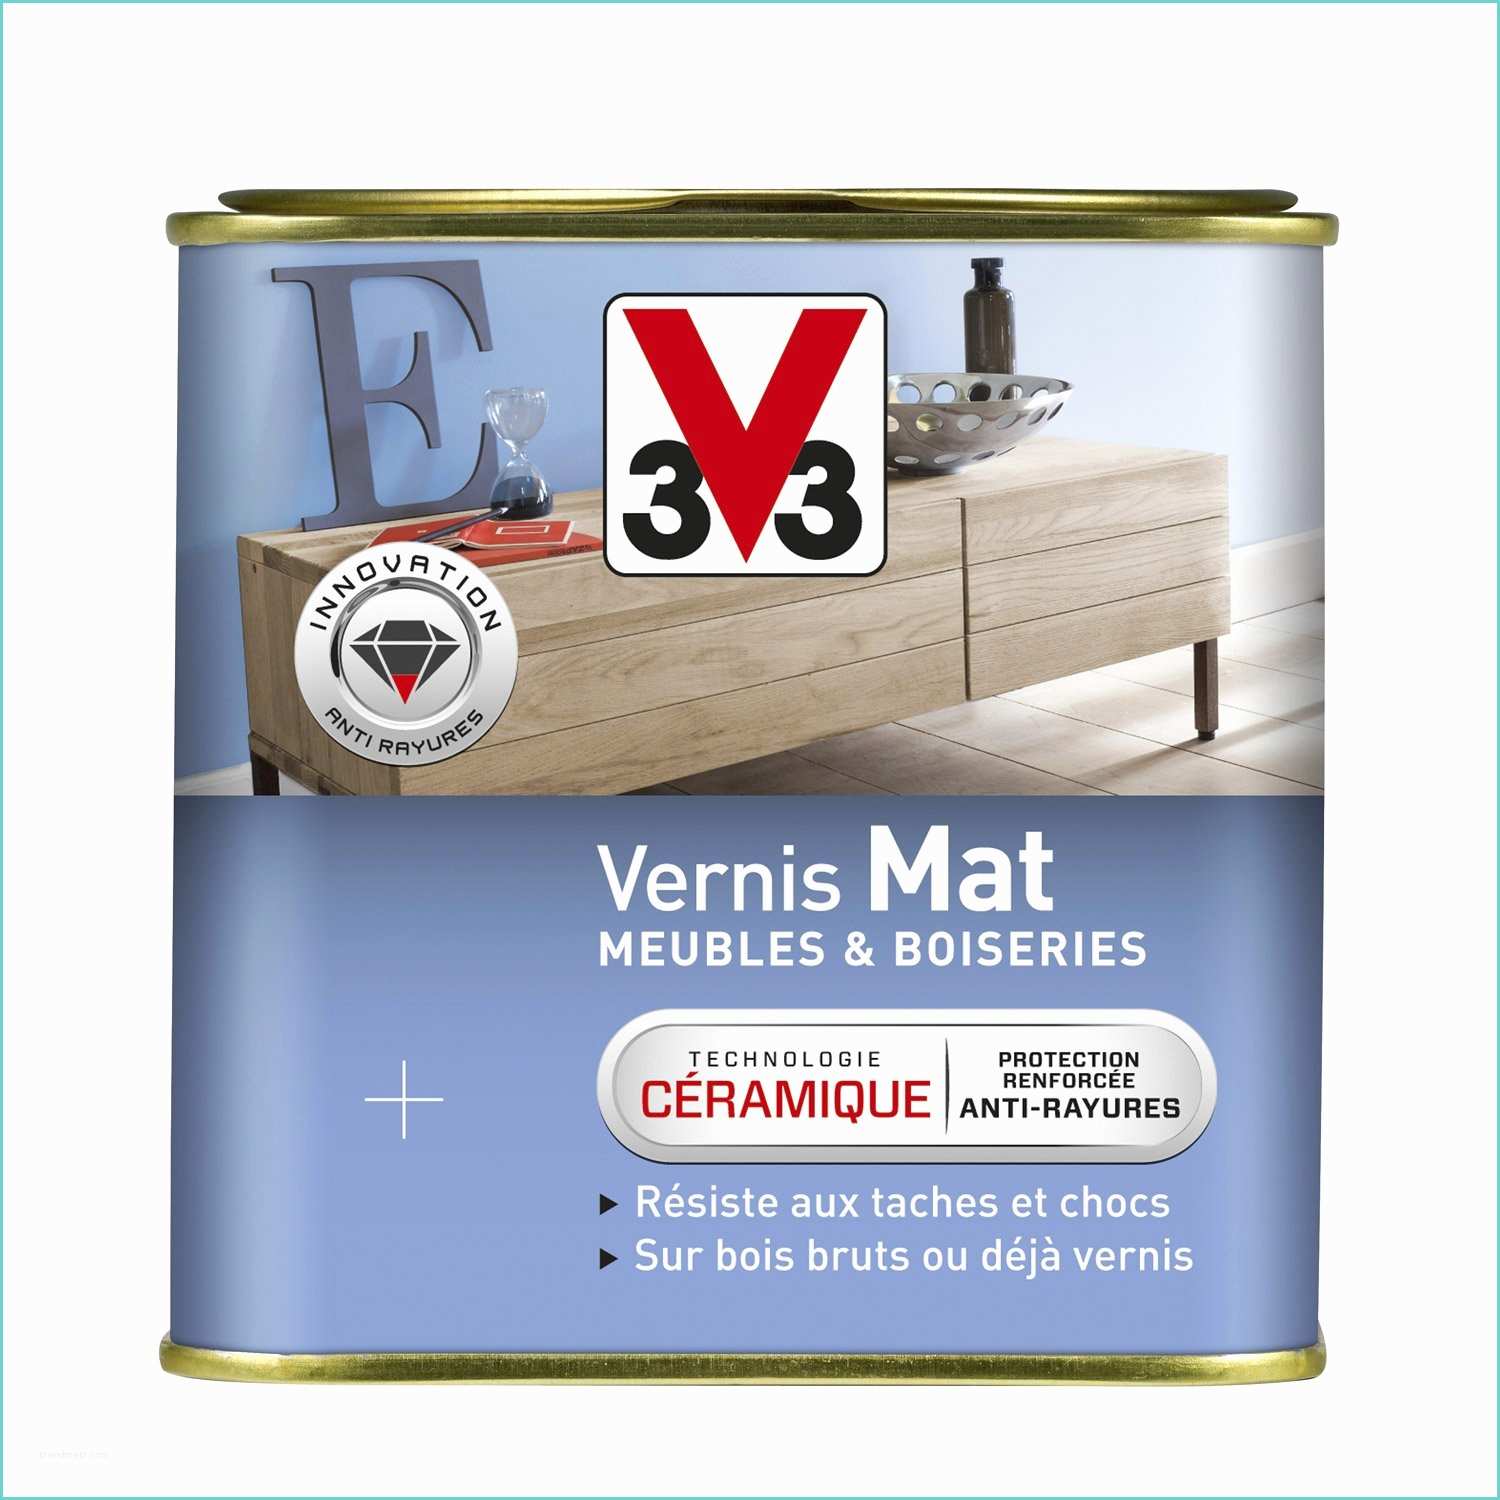 Vernis V33 Cuisine Et Bain Vernis Meuble Et Objets V33 Incolore 0 75 L